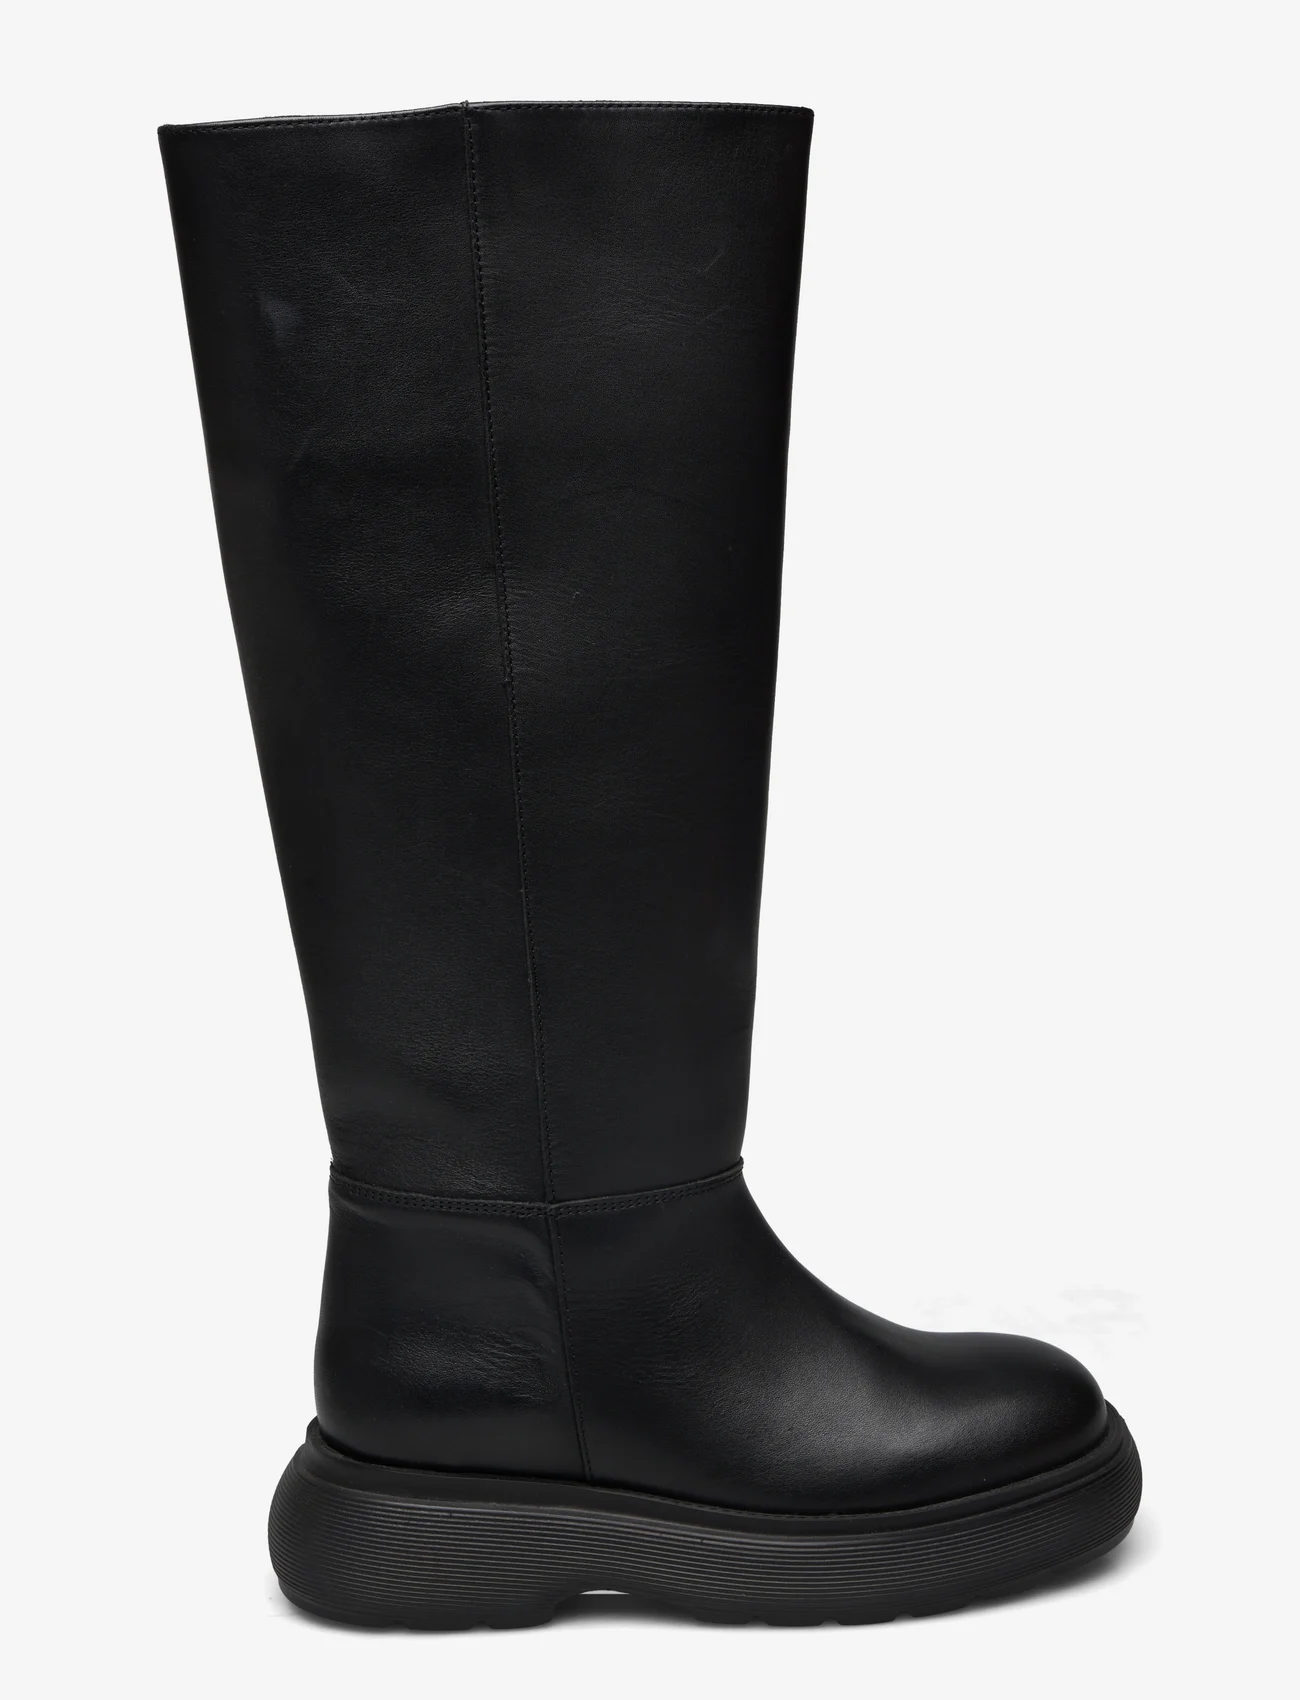 Garment Project - Cloud High Boot - Black Leather - höga stövlar - black - 1